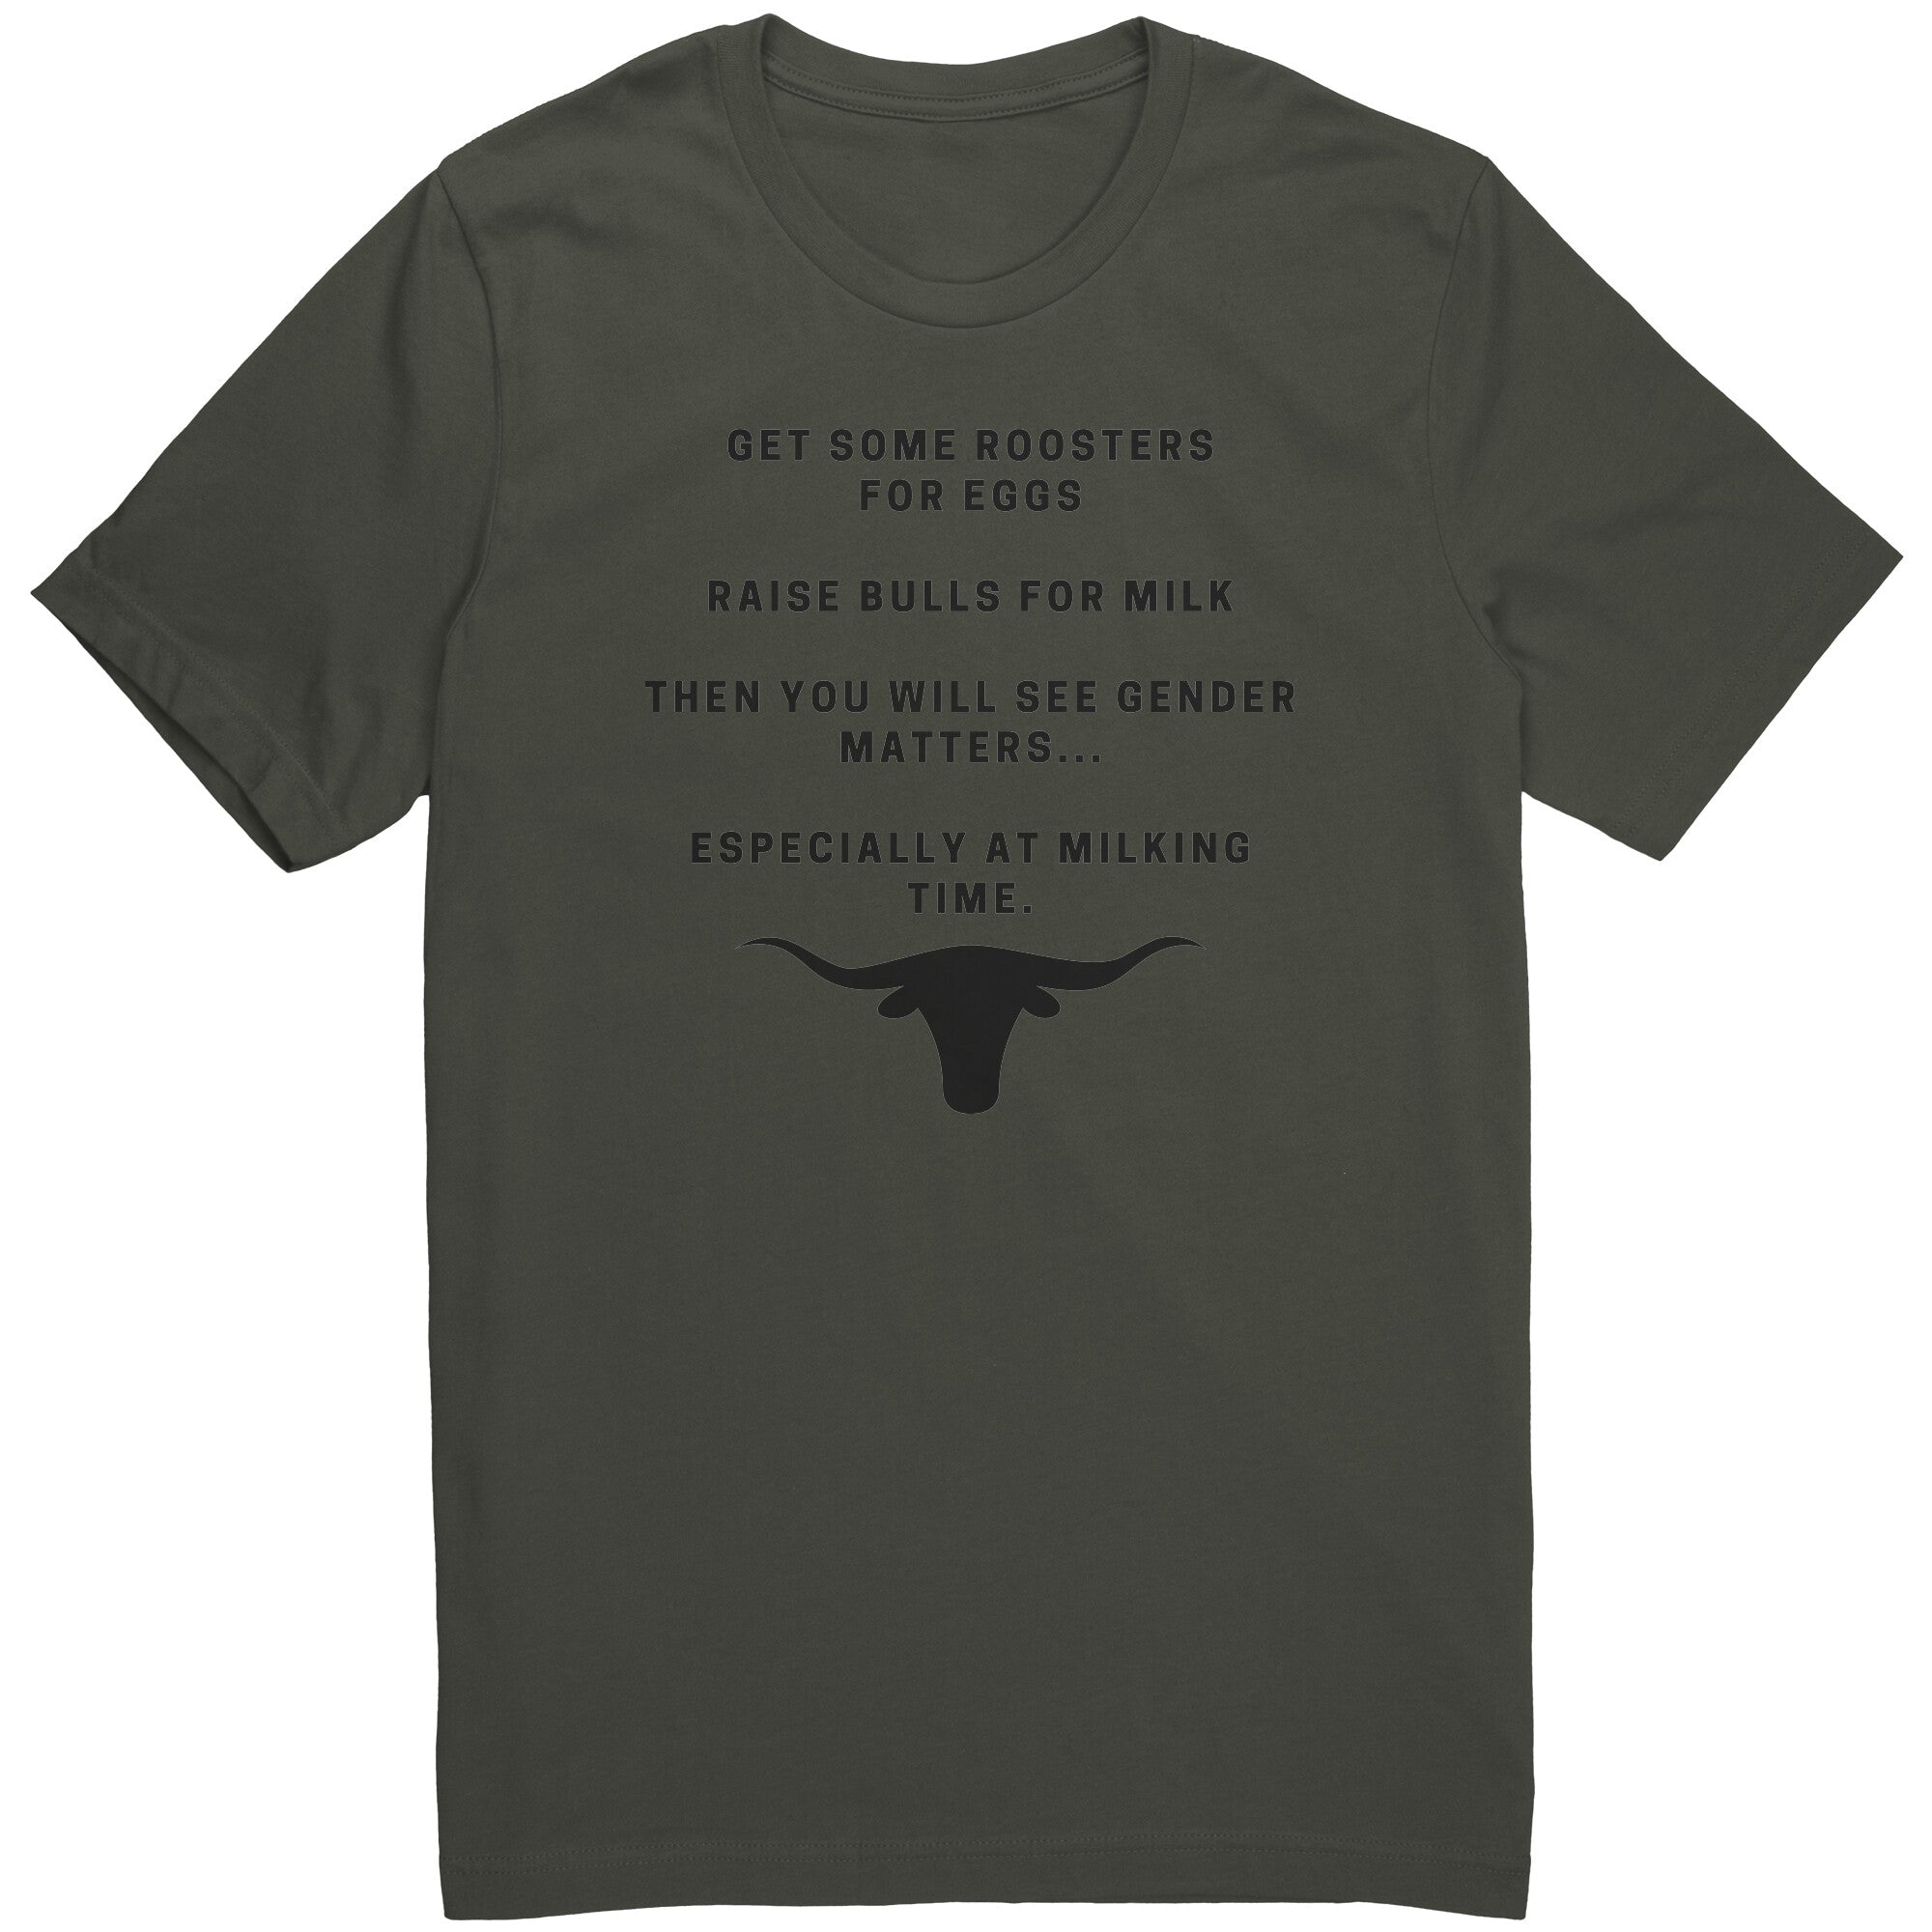 Funny Mens Shirt, Sarcastic Shirt For Men, Novelty Shirts, Offensive Shirt Milk A Bull Gender Matters Unisex Tee ark gray